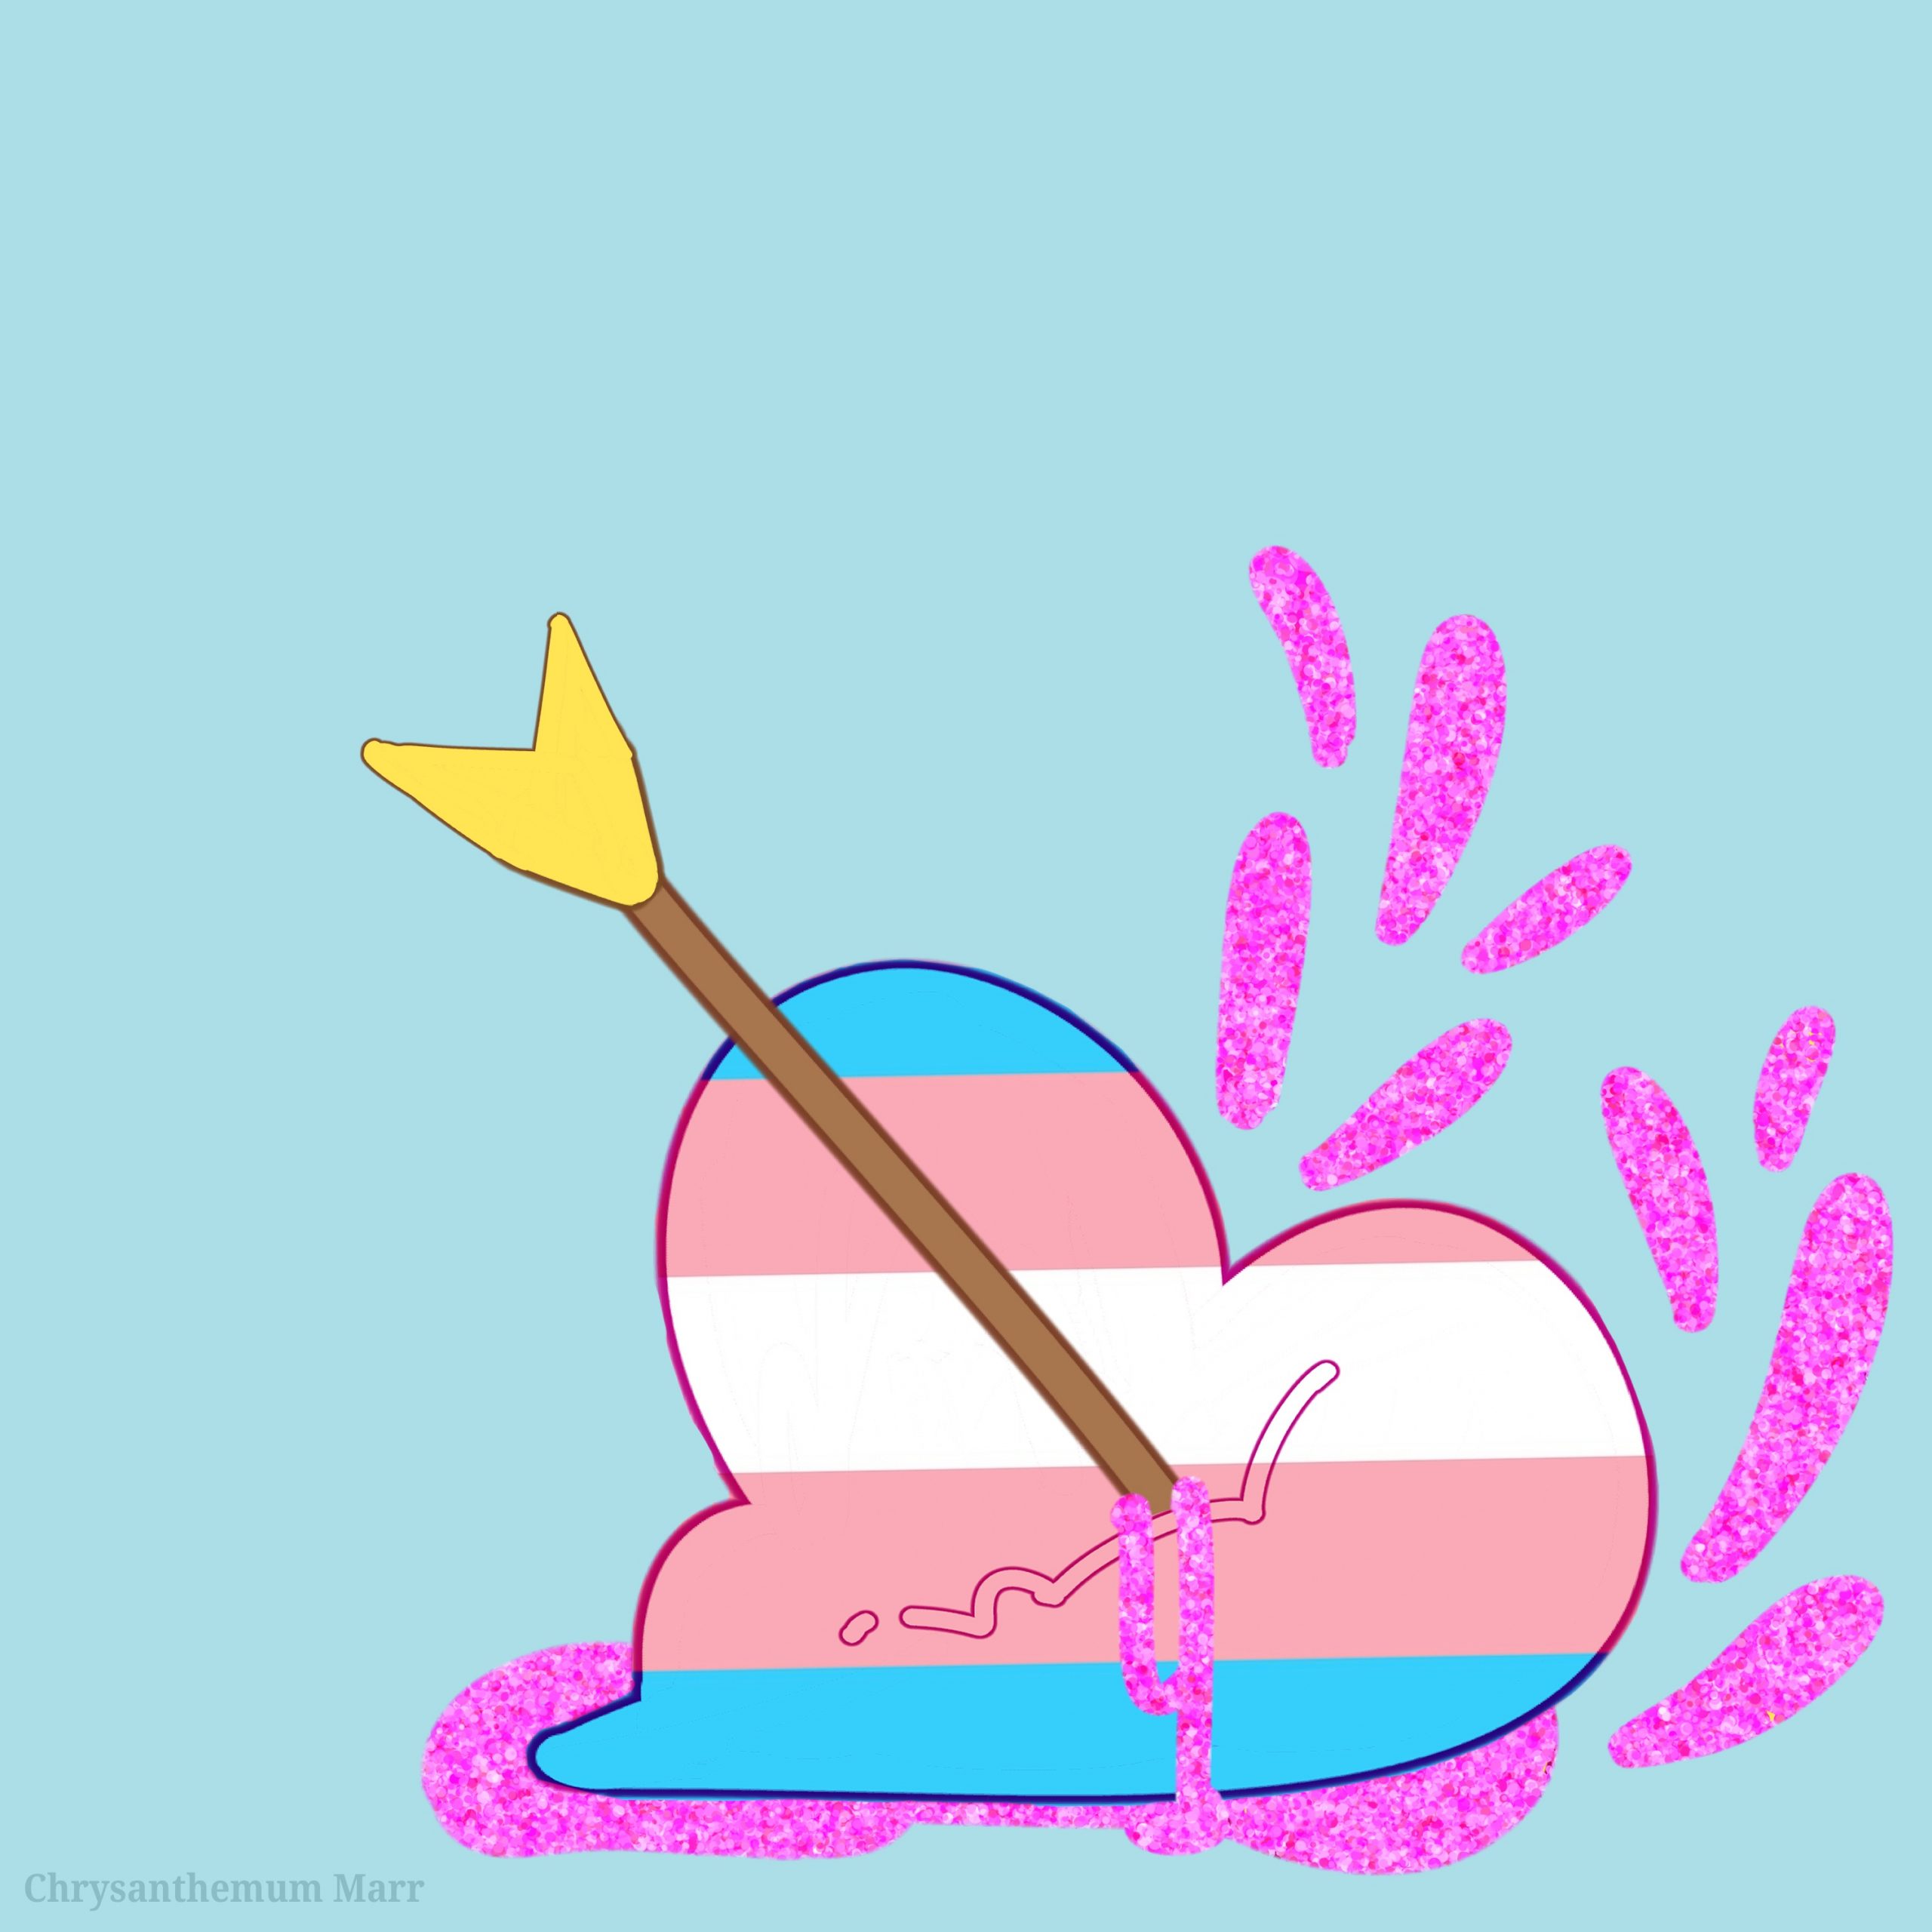 trans flag heart slumped and bleeding, pierced by an arrow